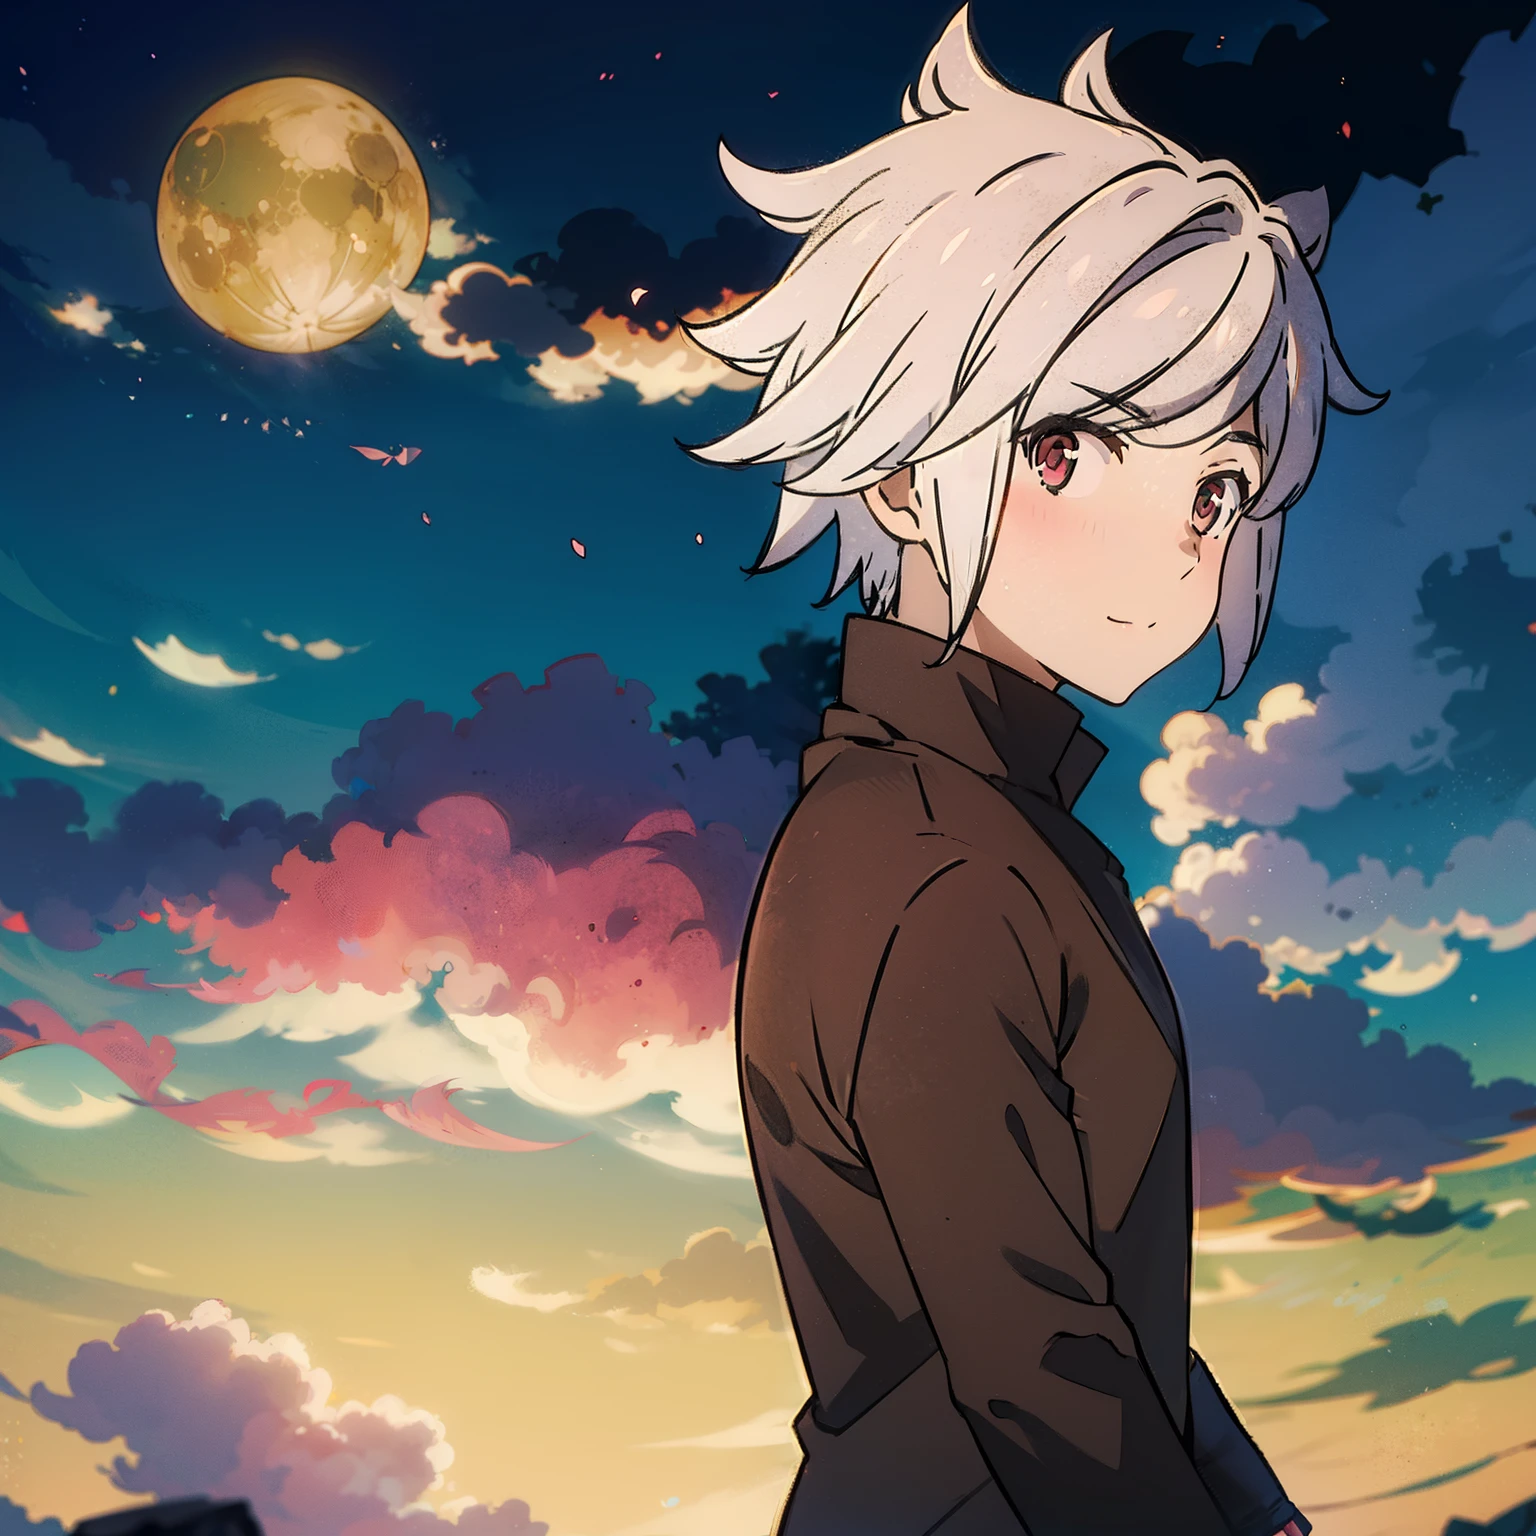 Boy Anime, 1 boy, white  hair, Eyes red, knife, night background, magic staff, heavy armor